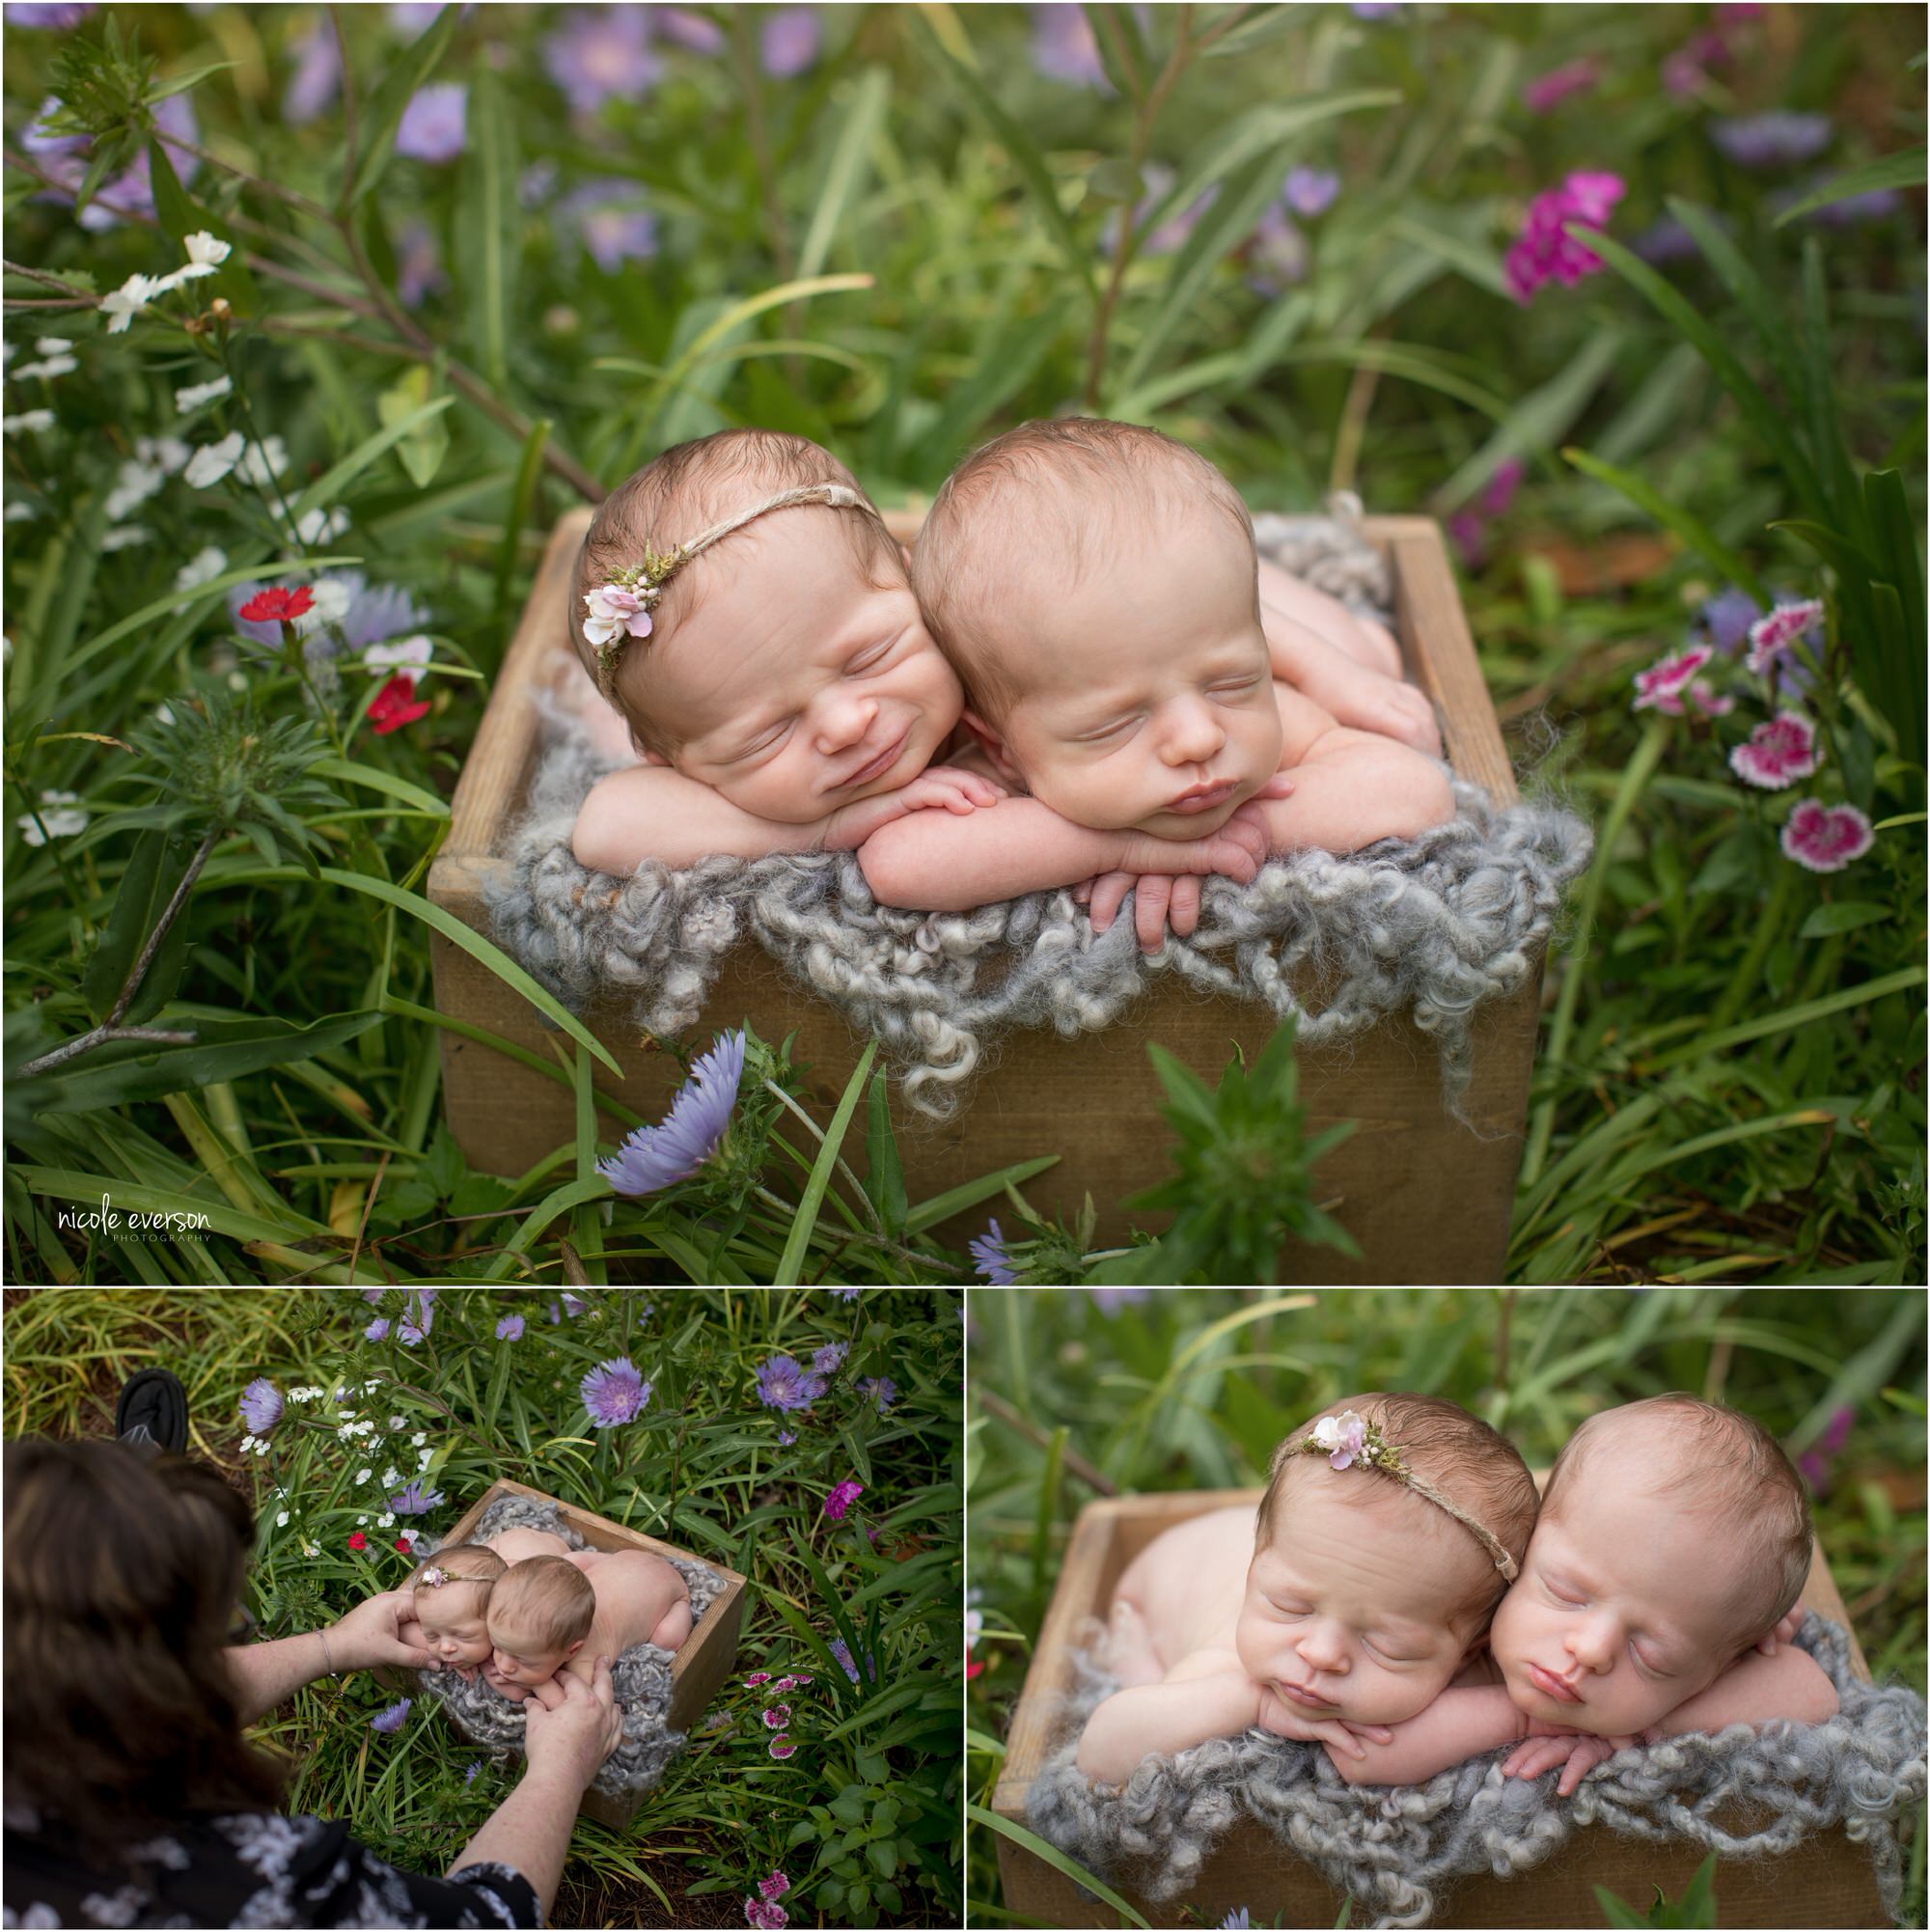 newborn twin photography ideas